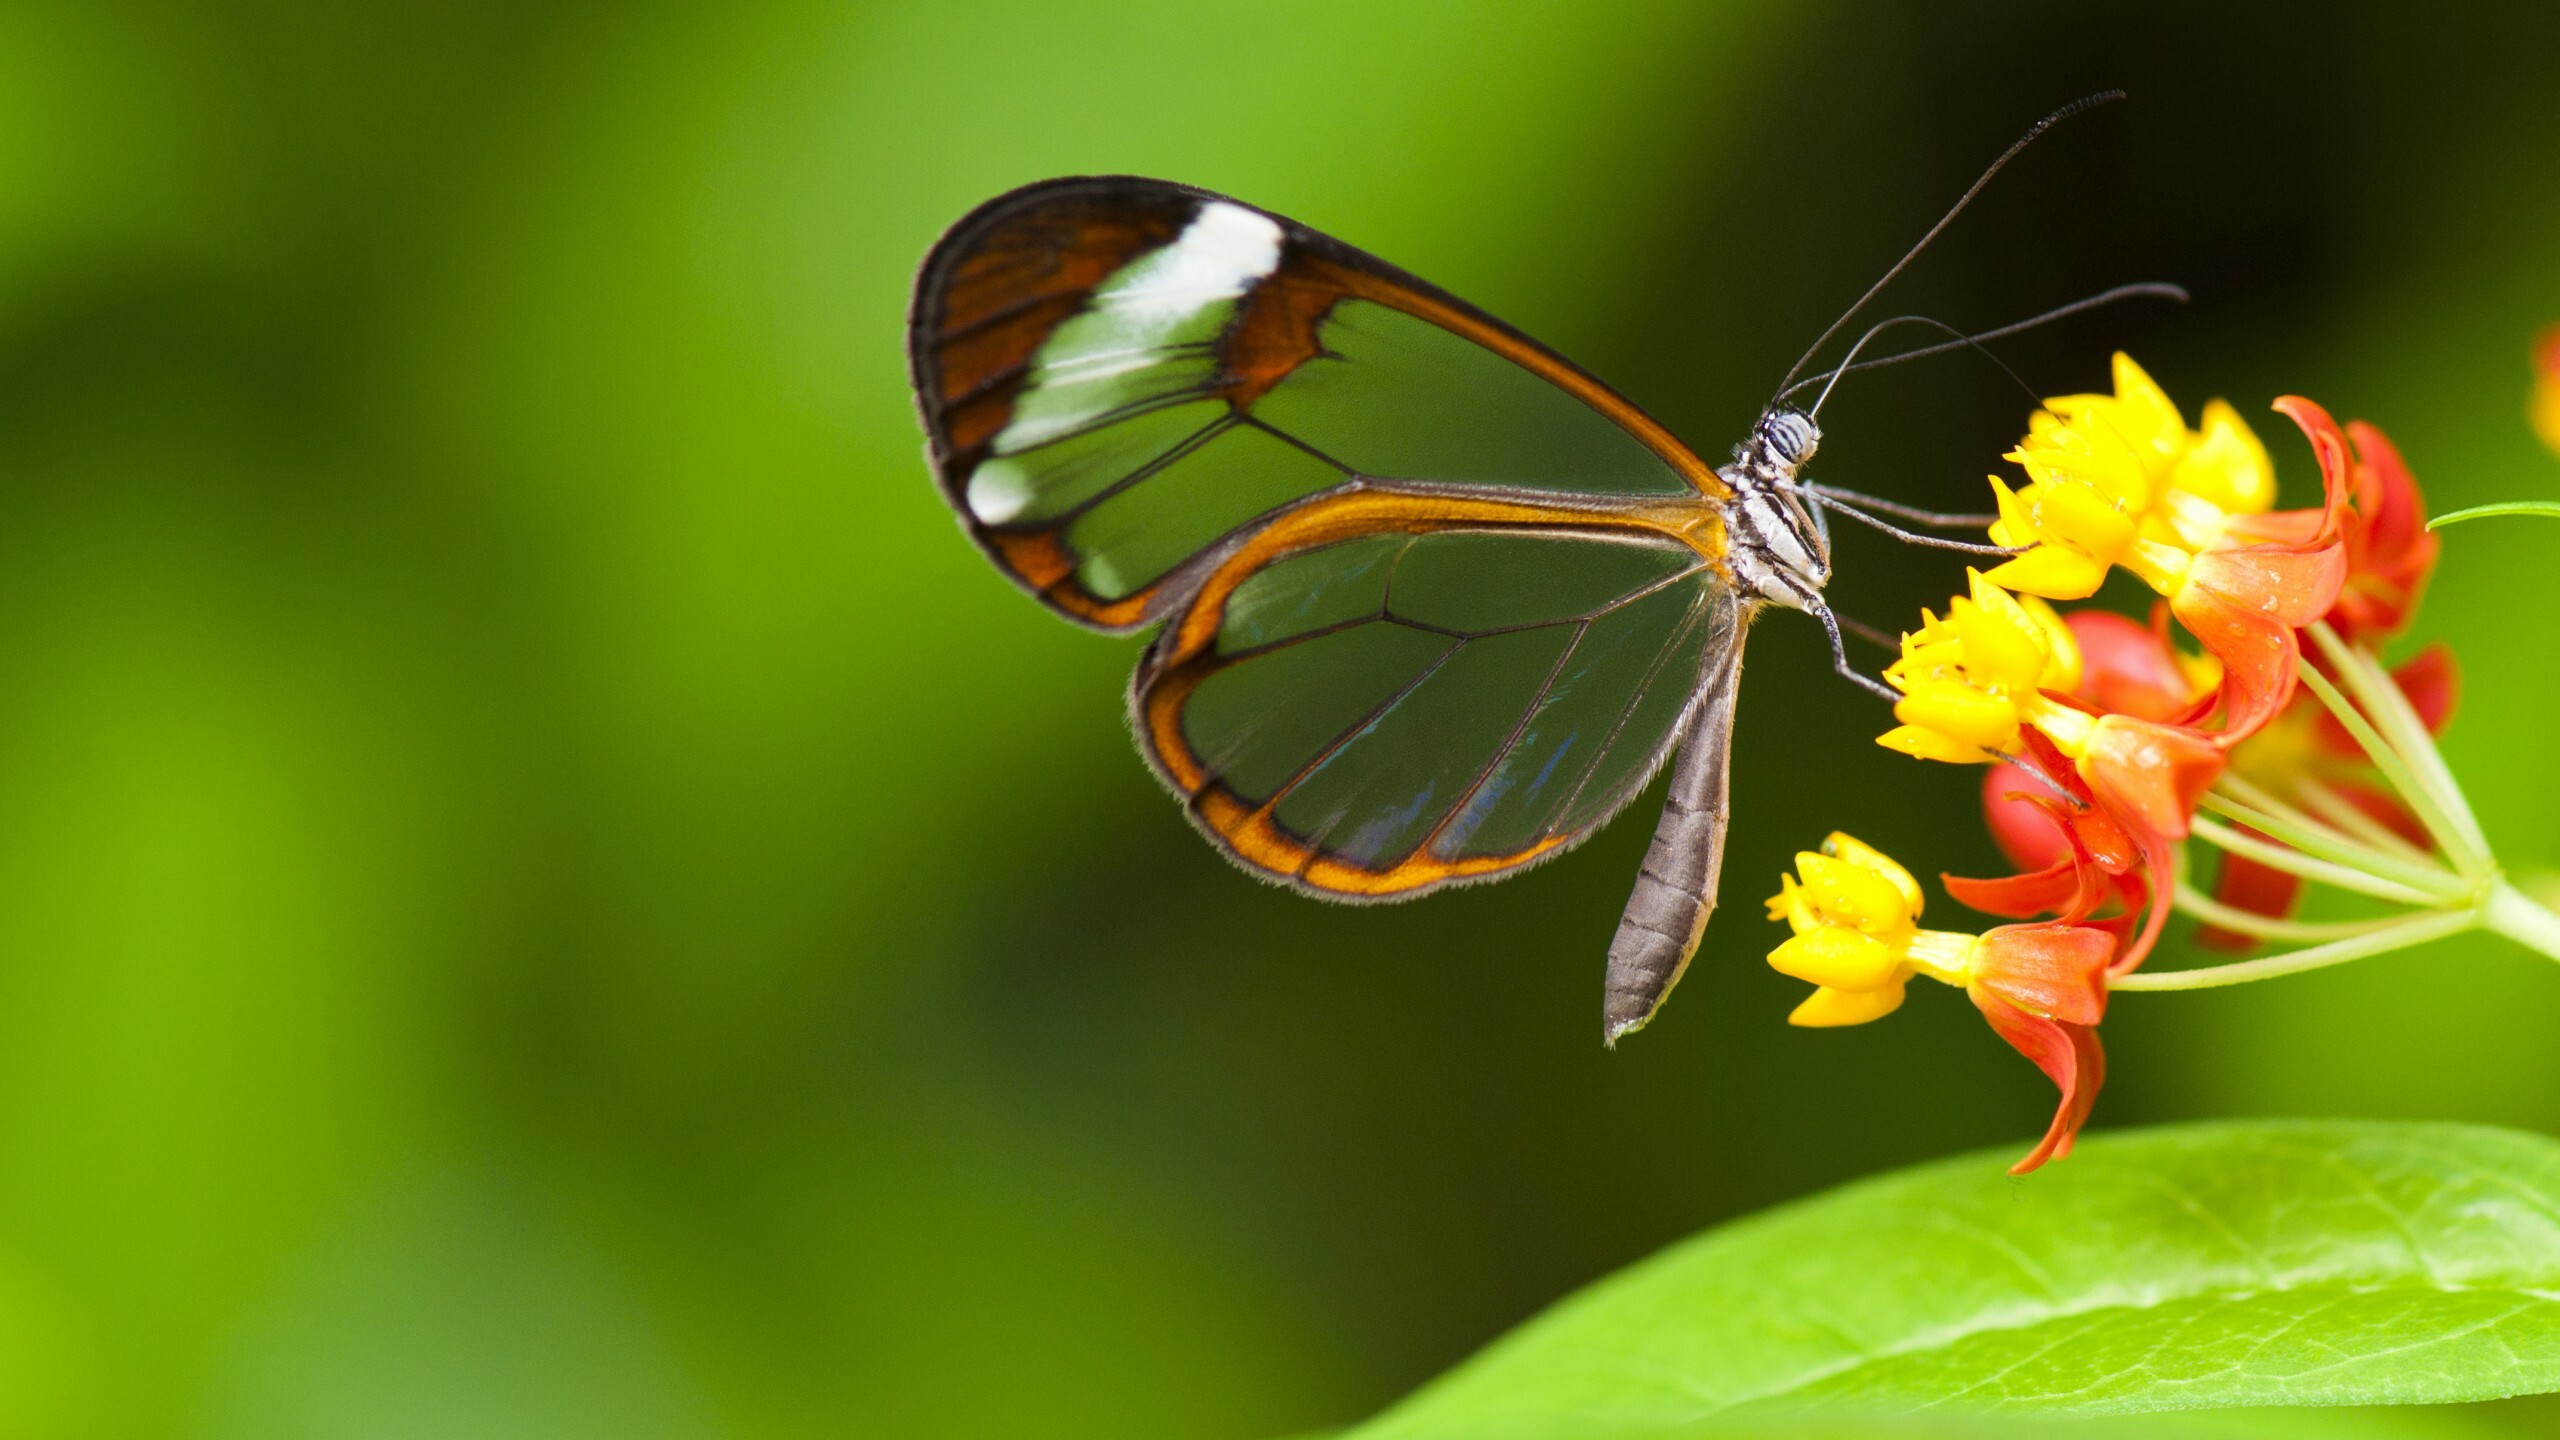 Butterfly wallpaper, Green glass nature, Colorful insects, Flower garden, 2560x1440 HD Desktop